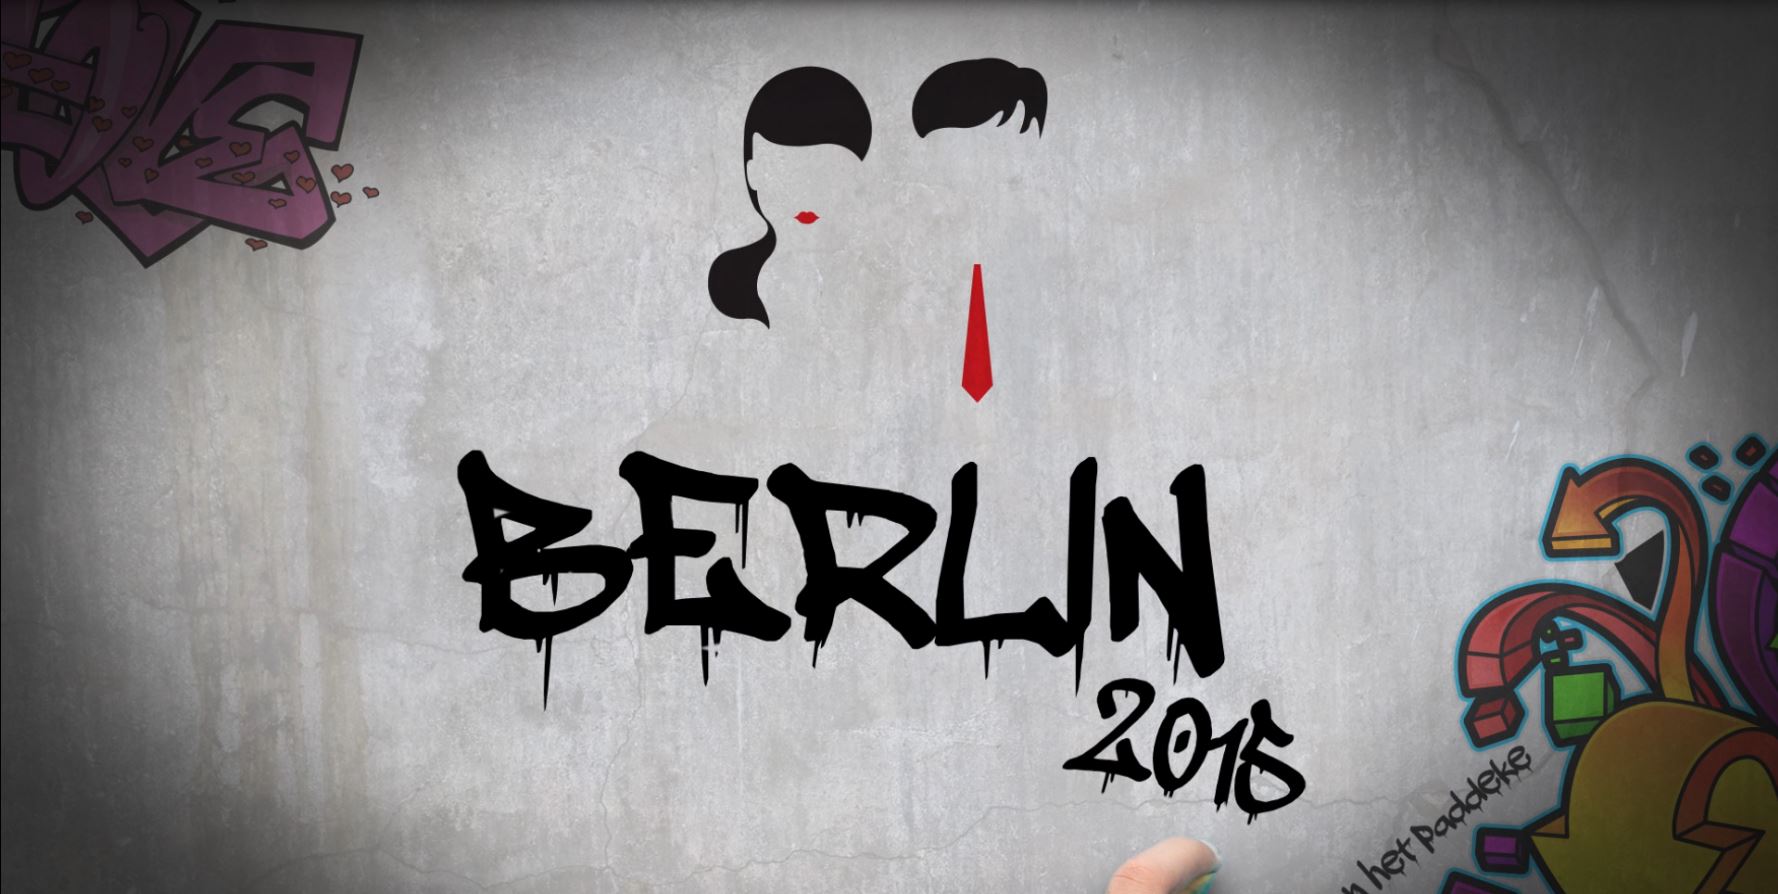 berlin 2015